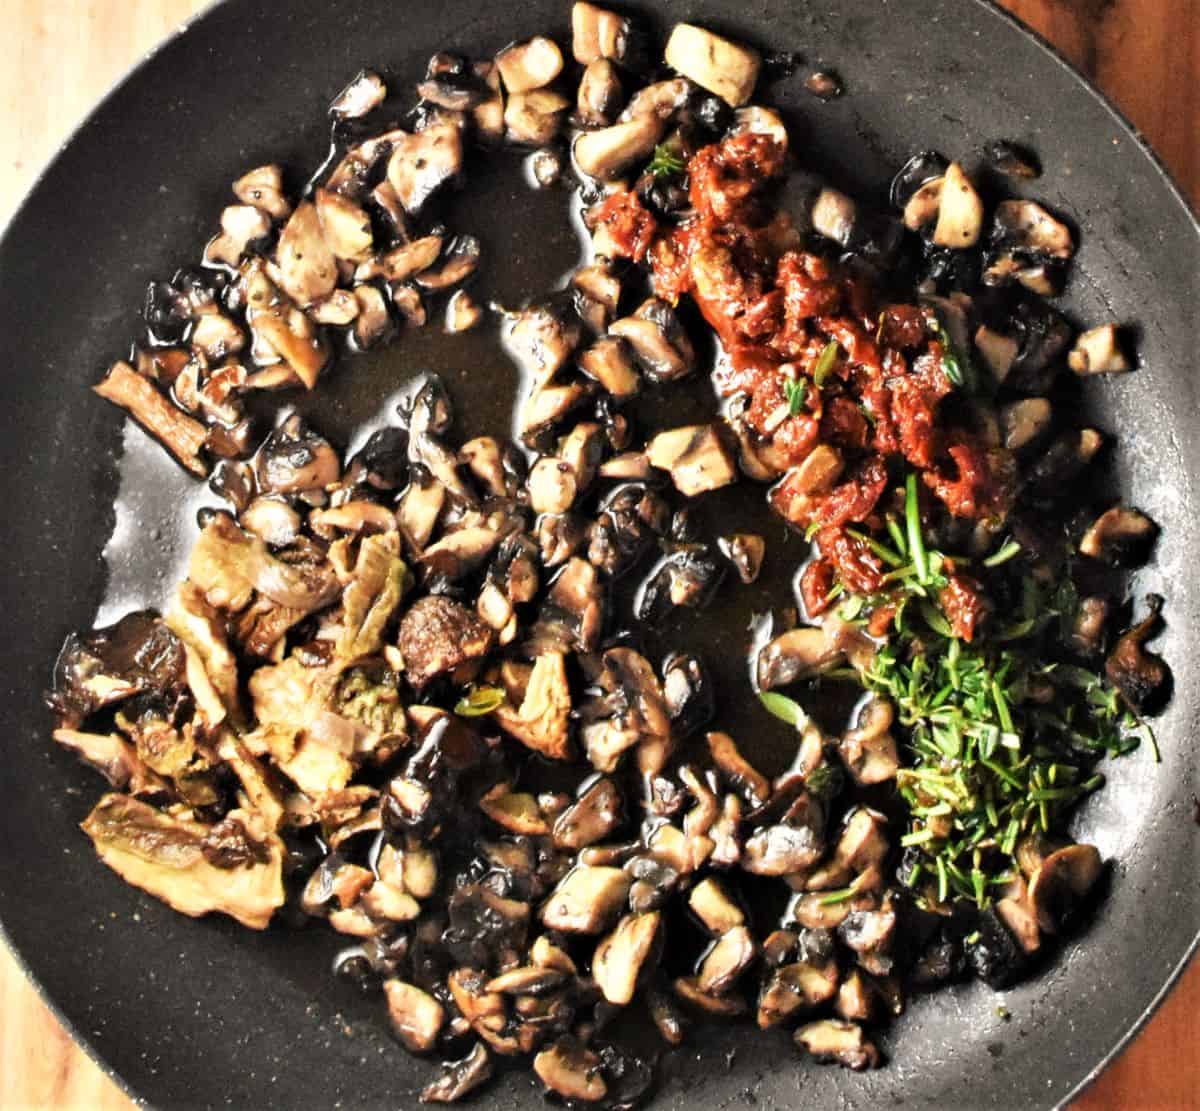 Chopped mushroom with herbs in frying pan.